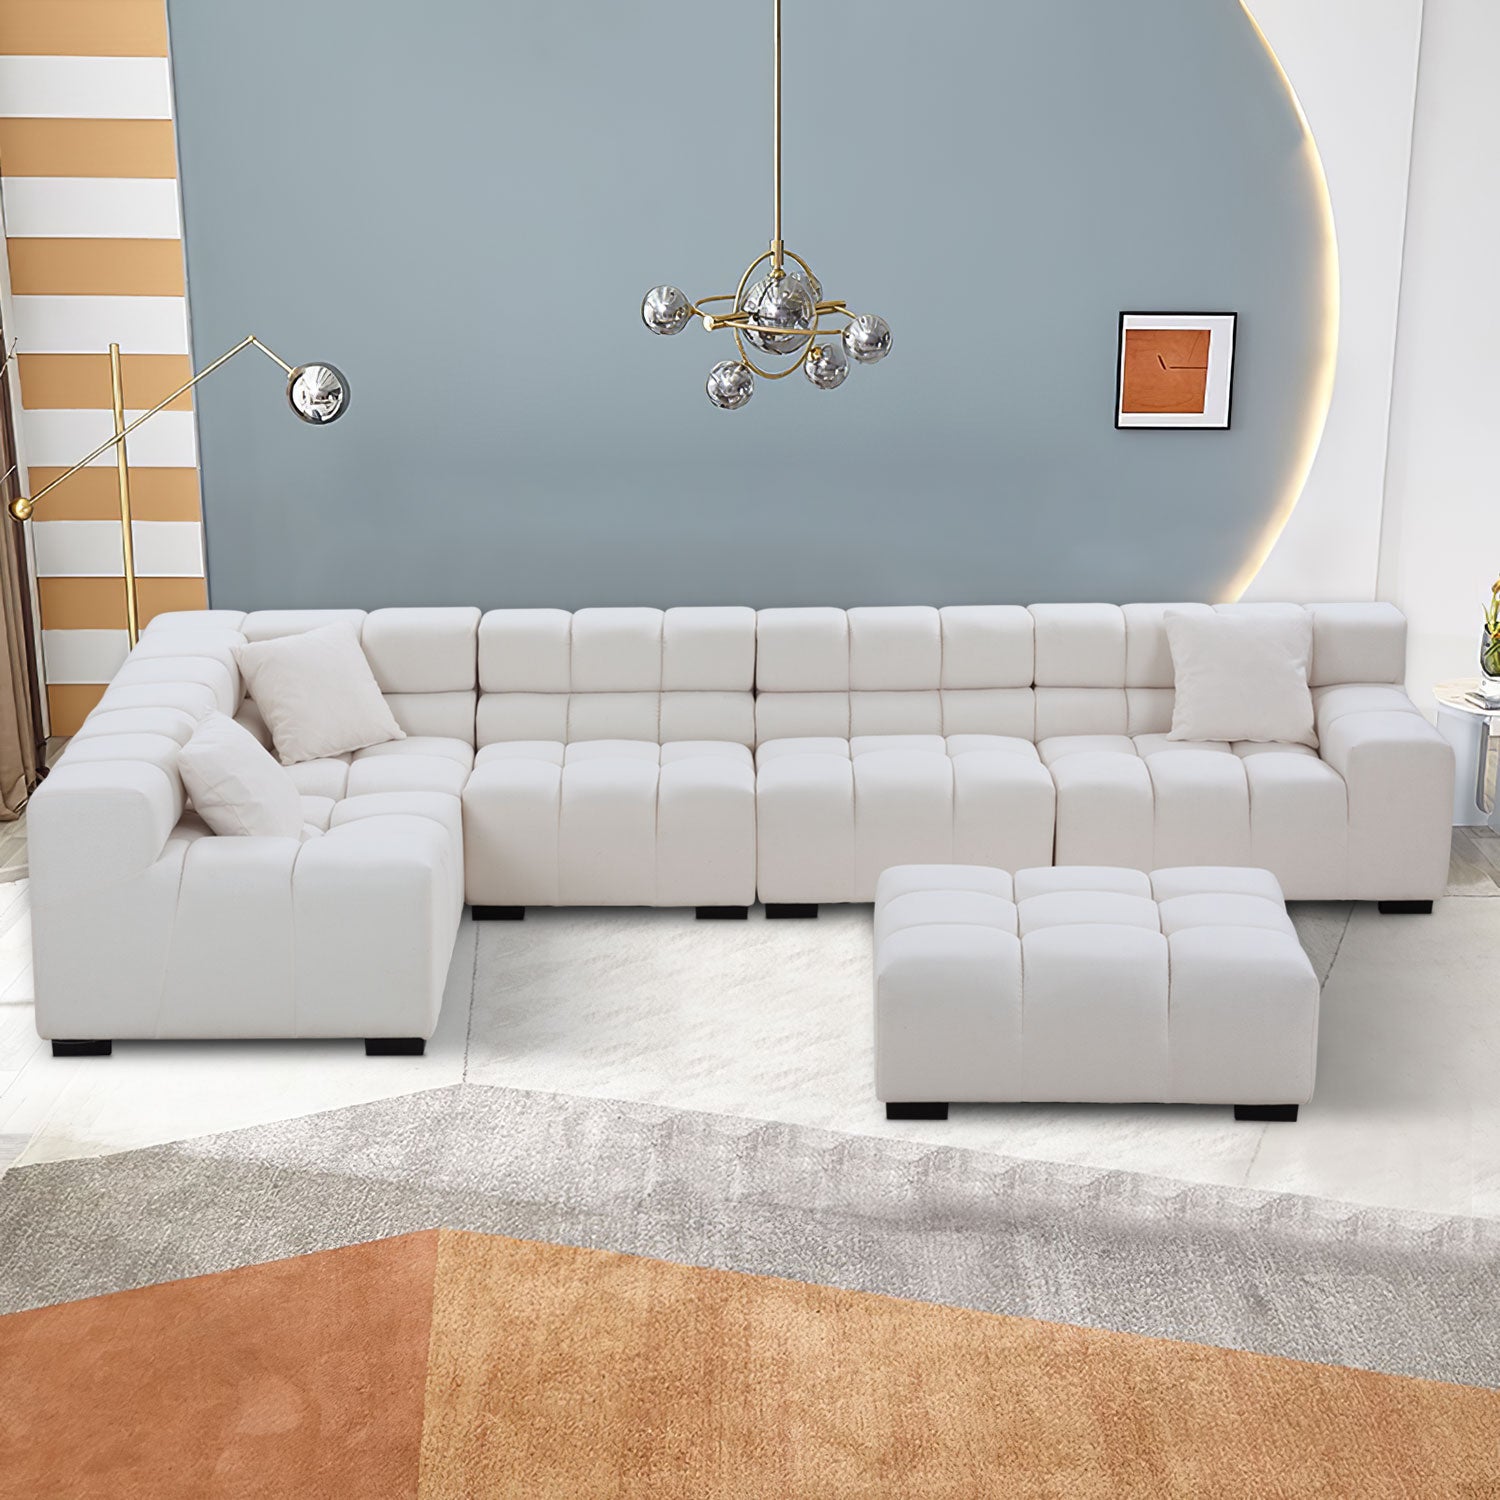 Justone Interior Modern Oversize Sectional & Ottoman Set - Beige